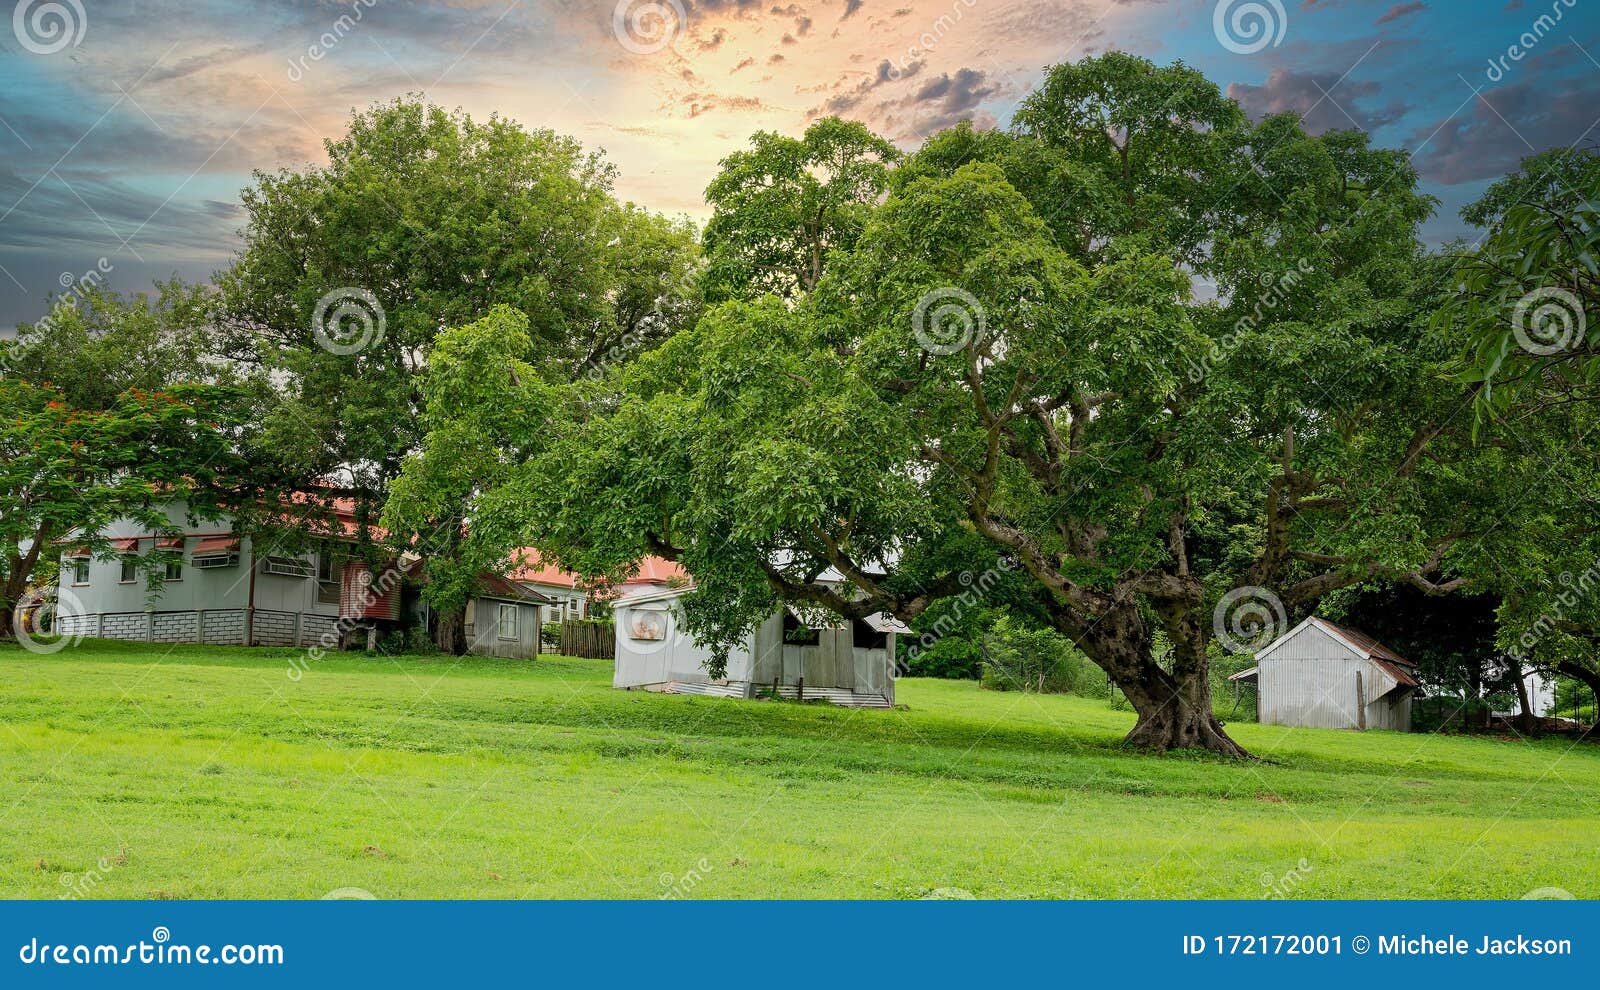 Sunset Over Historic Homestead. Sunset over an historic homestead set in parkland amongst lush green grass